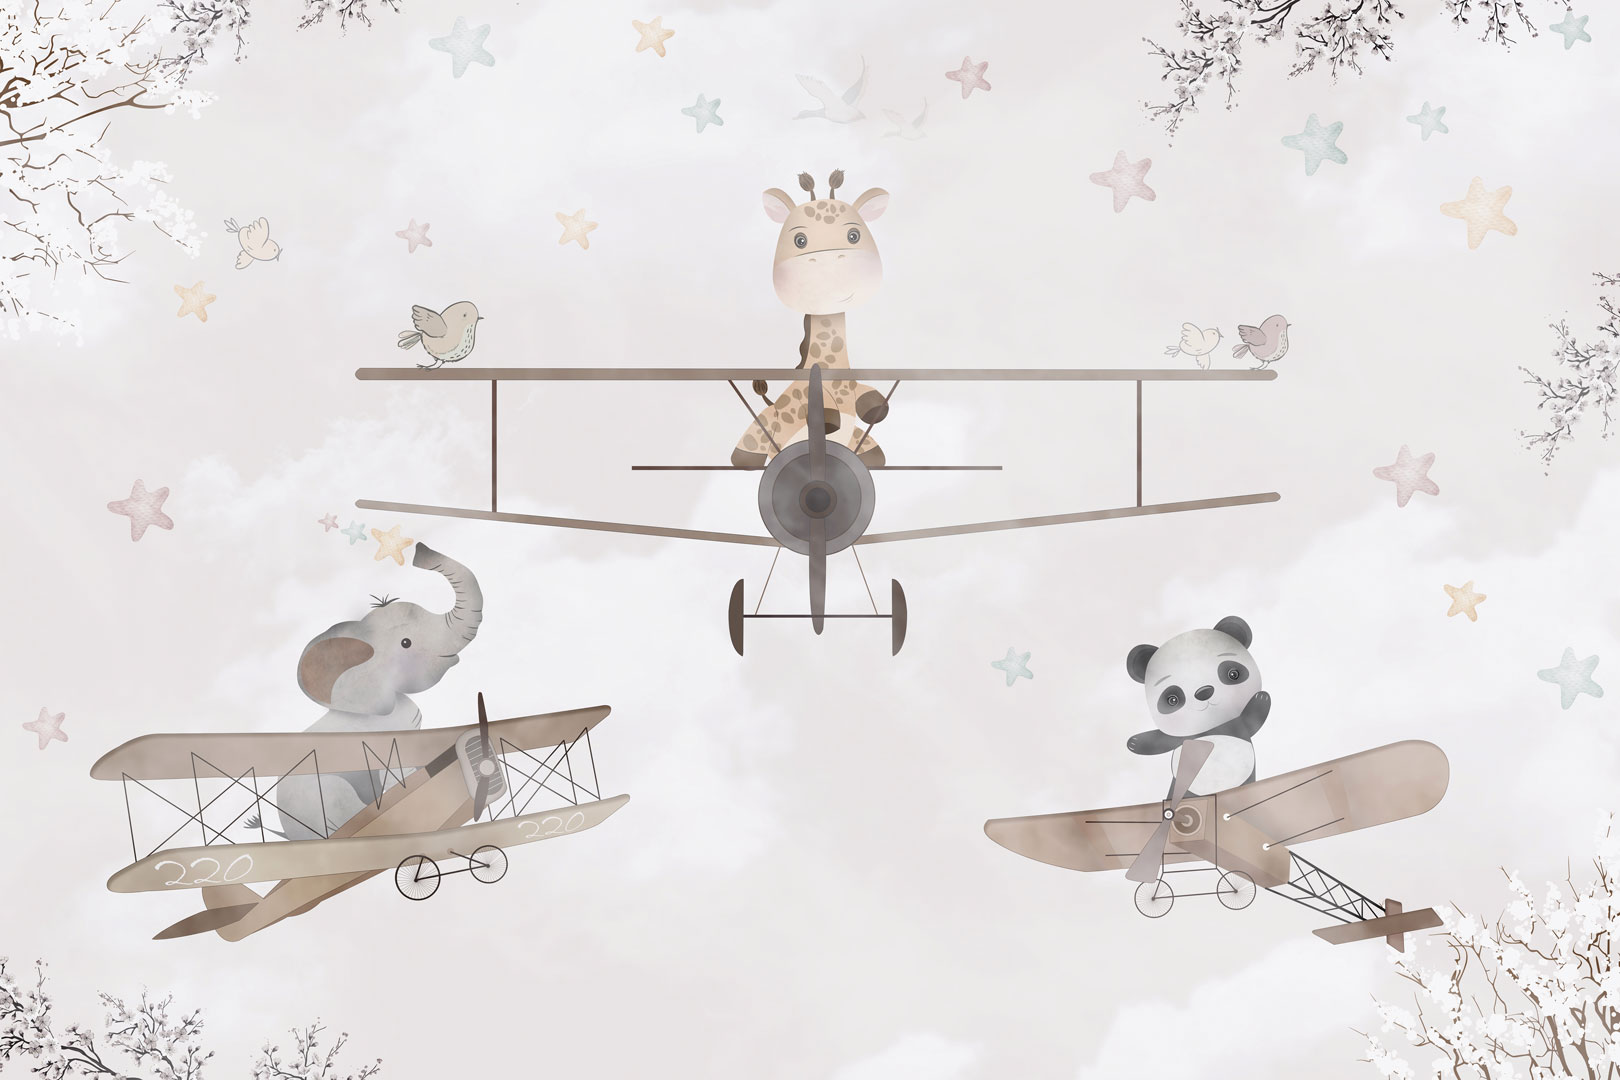 Wallpaper for children, AVIONETTE JOURNEY, animals flying in planes with propellers - Dekoori image 1